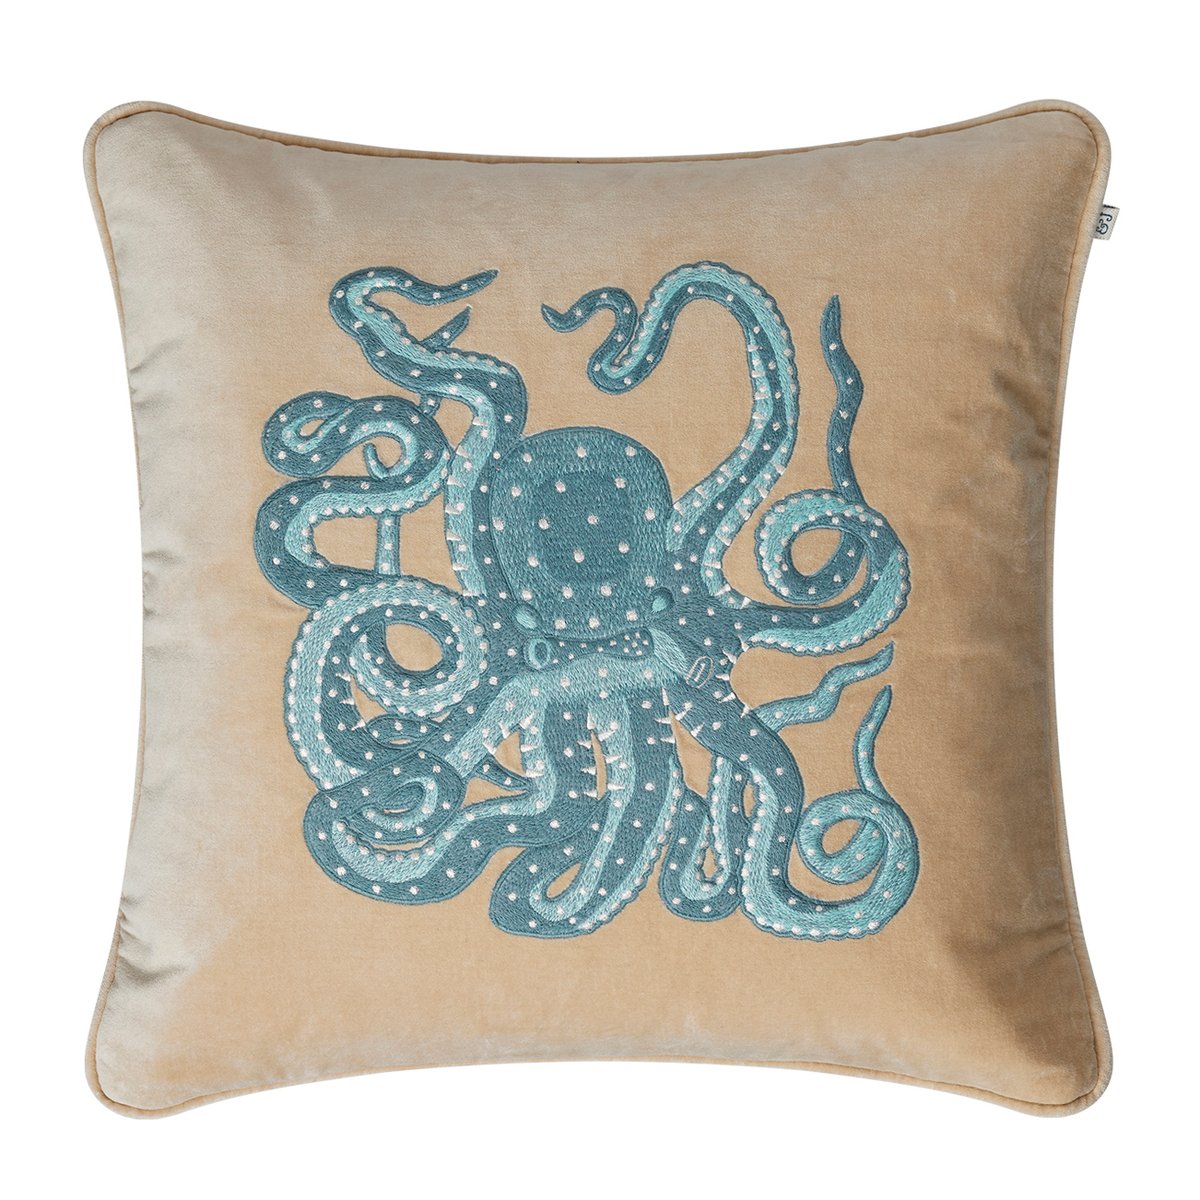 Bilde av Chhatwal & Jonsson Embroidered Octopus putetrekk 50x50 cm Beige-aqua